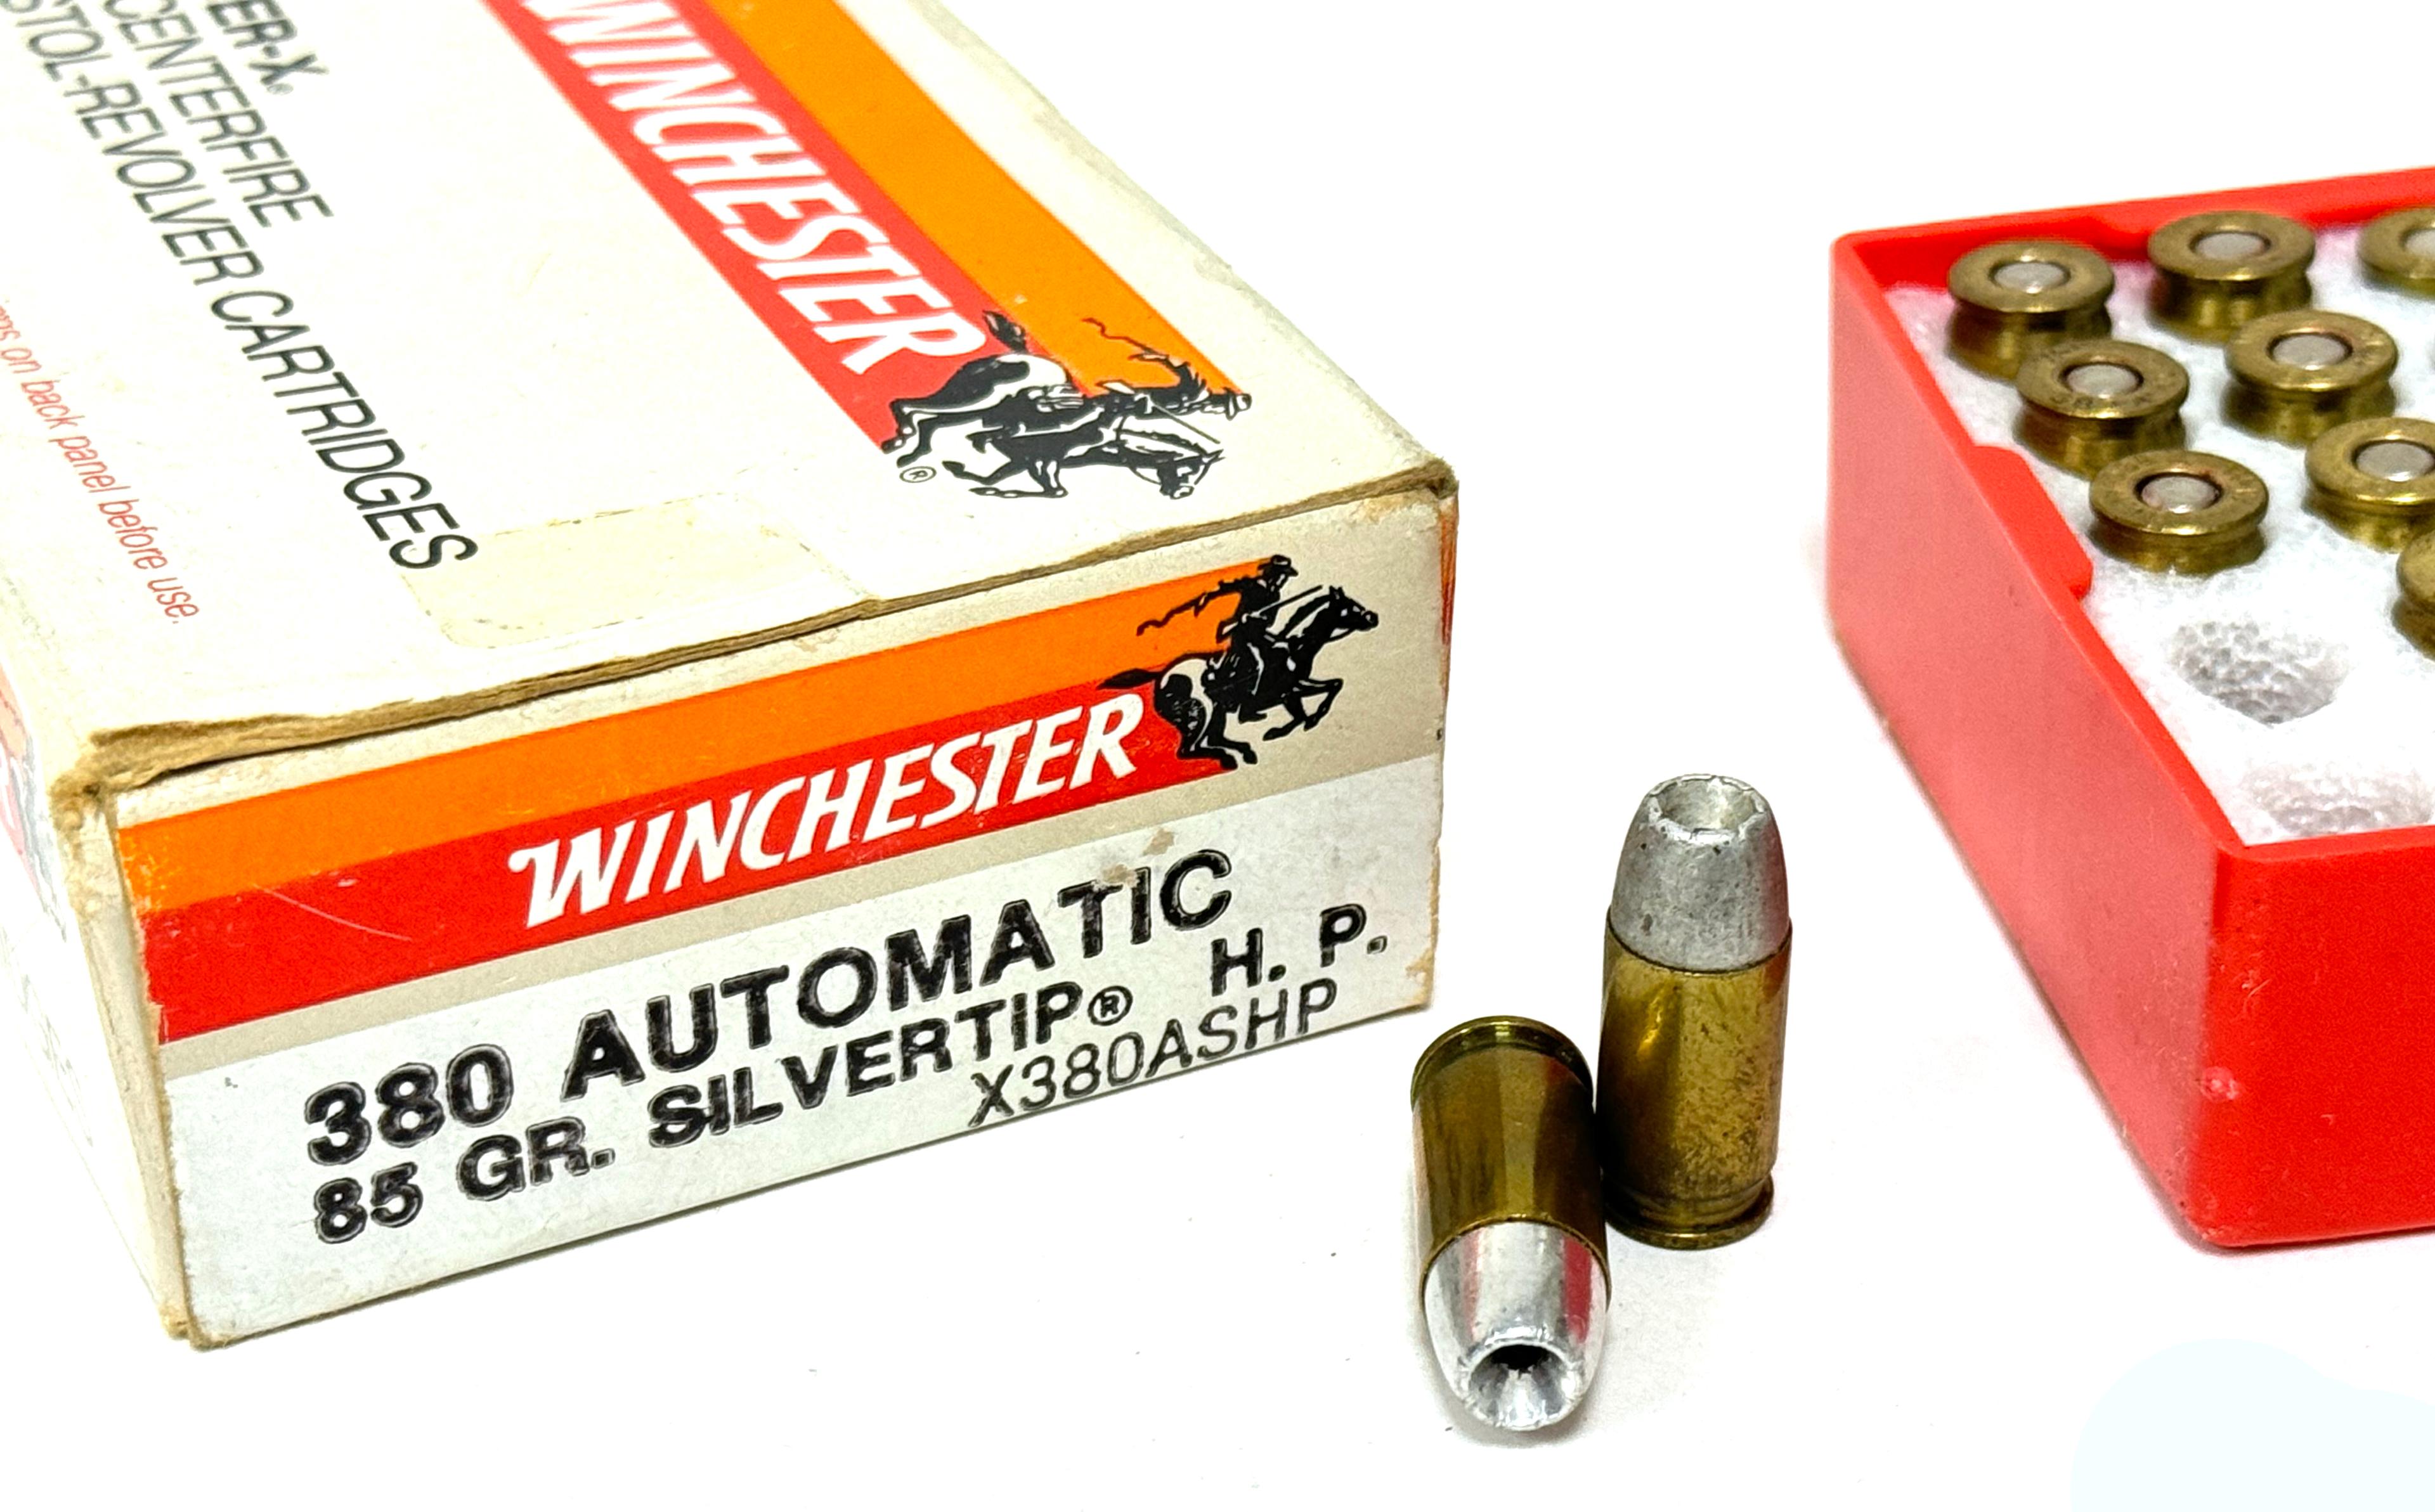 NIB 50rds. Of .380 AUTO 85gr. Silvertip HP Winchester Ammunition